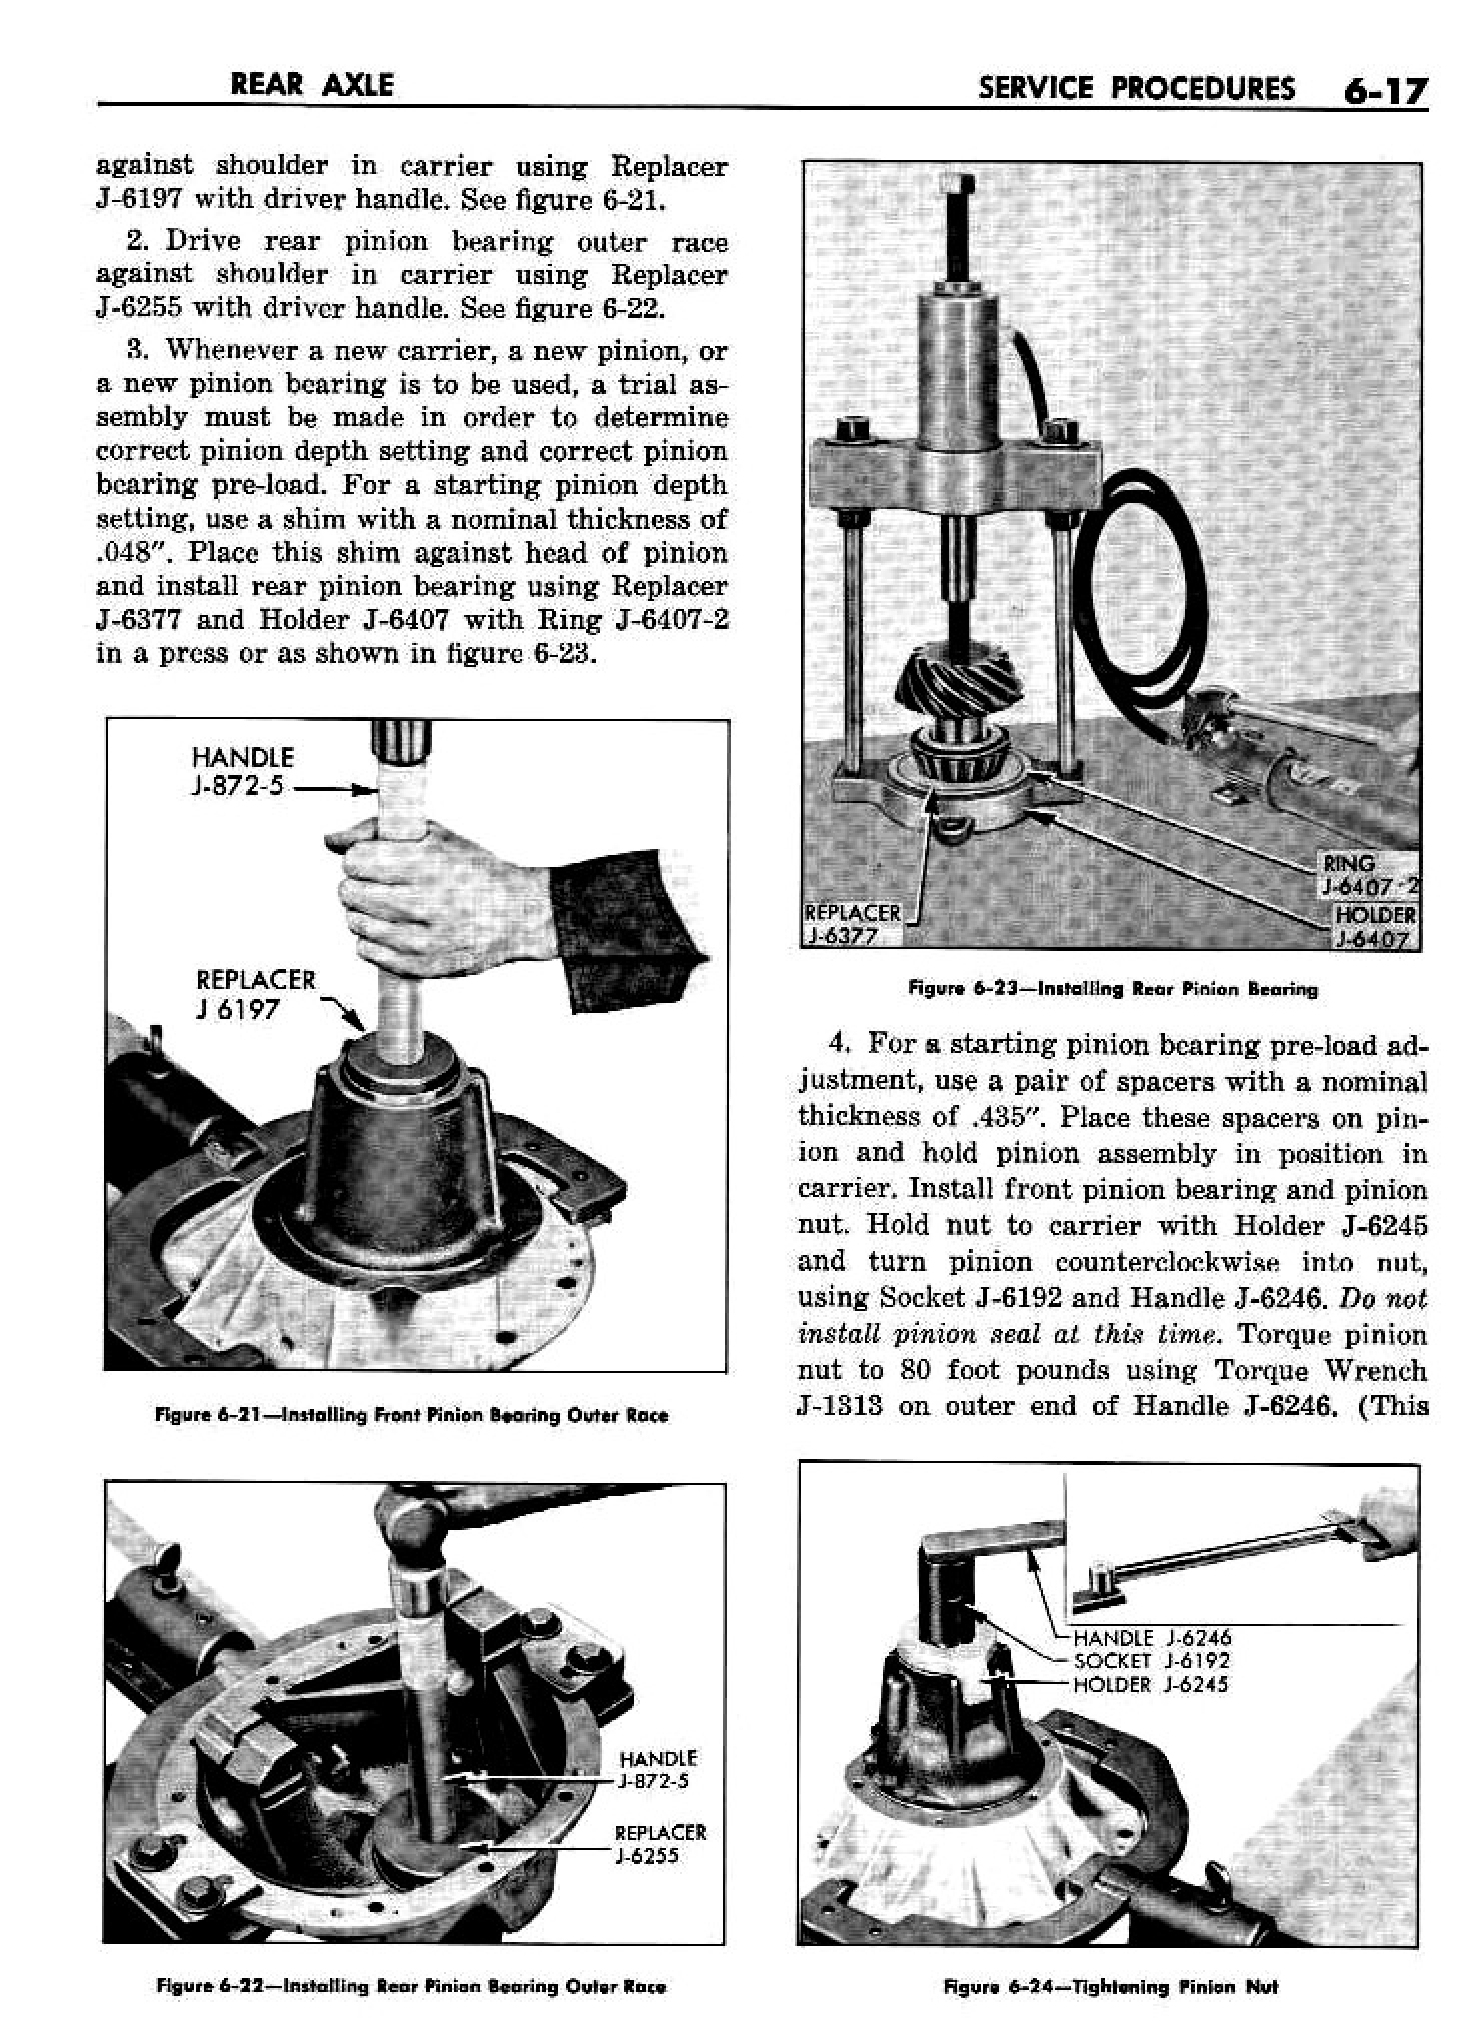 n_07 1958 Buick Shop Manual - Rear Axle_17.jpg